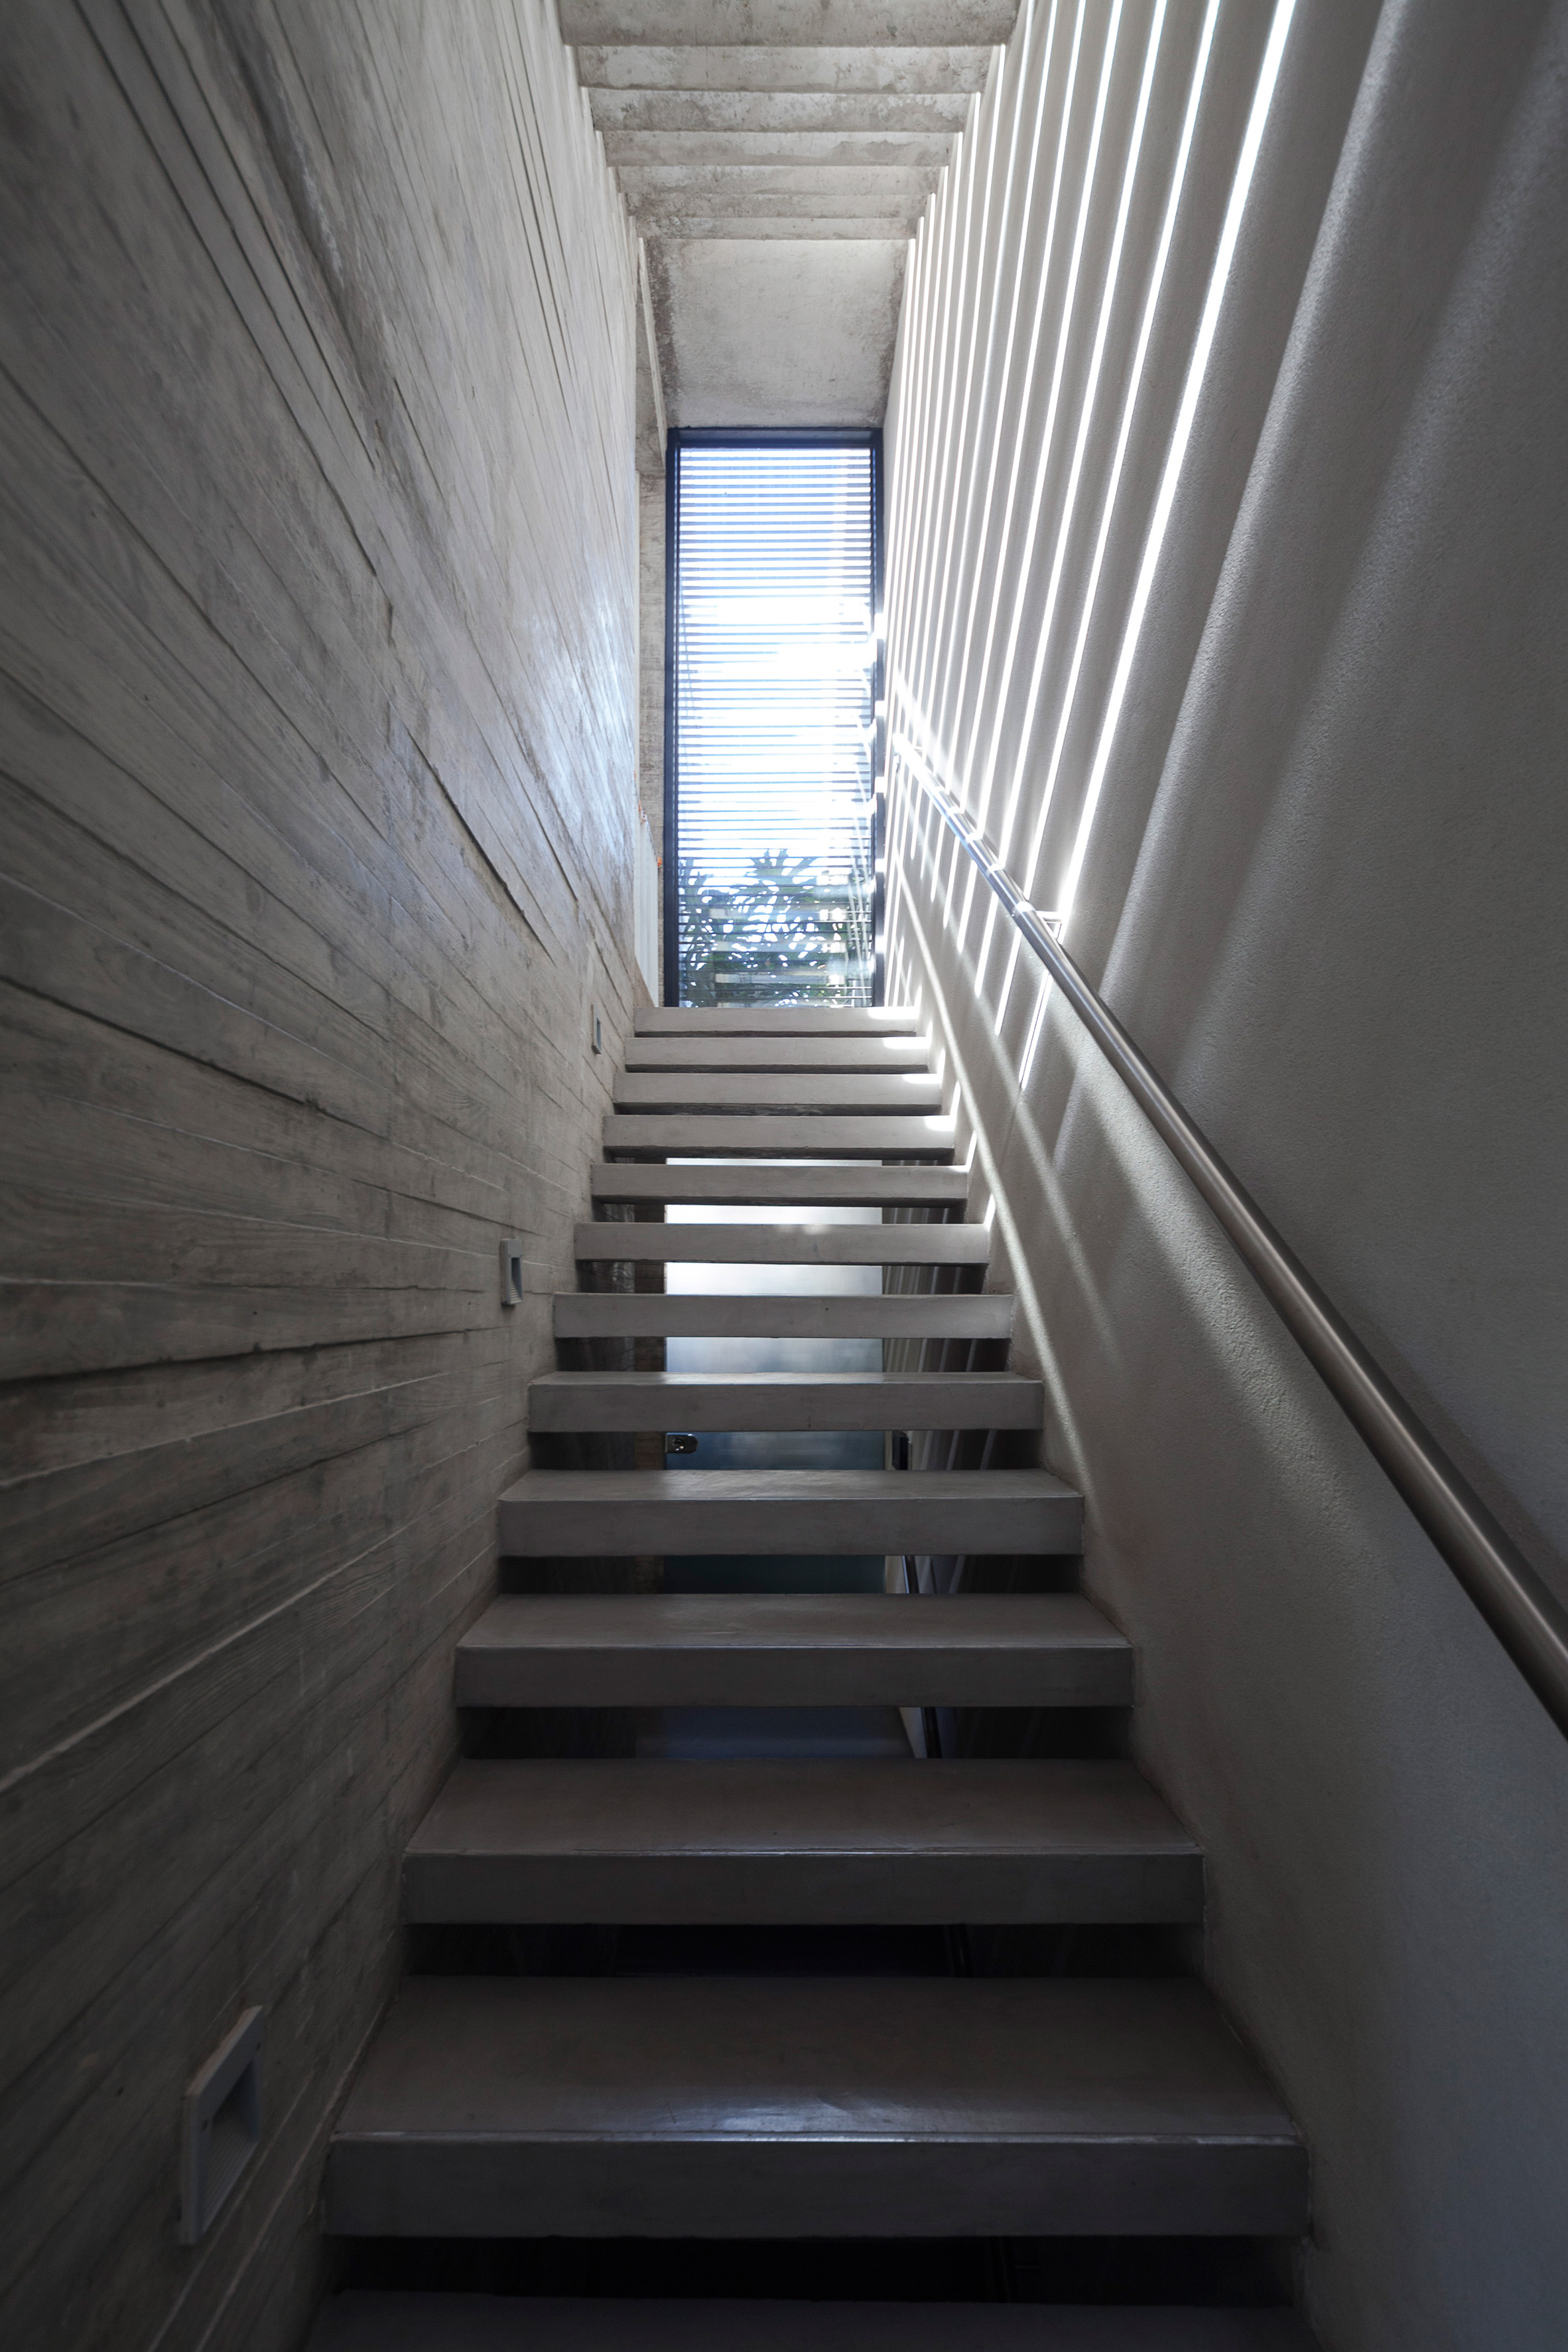 Architecture firm Dieguez Fridman designs concrete Corner House in Buenos Aires